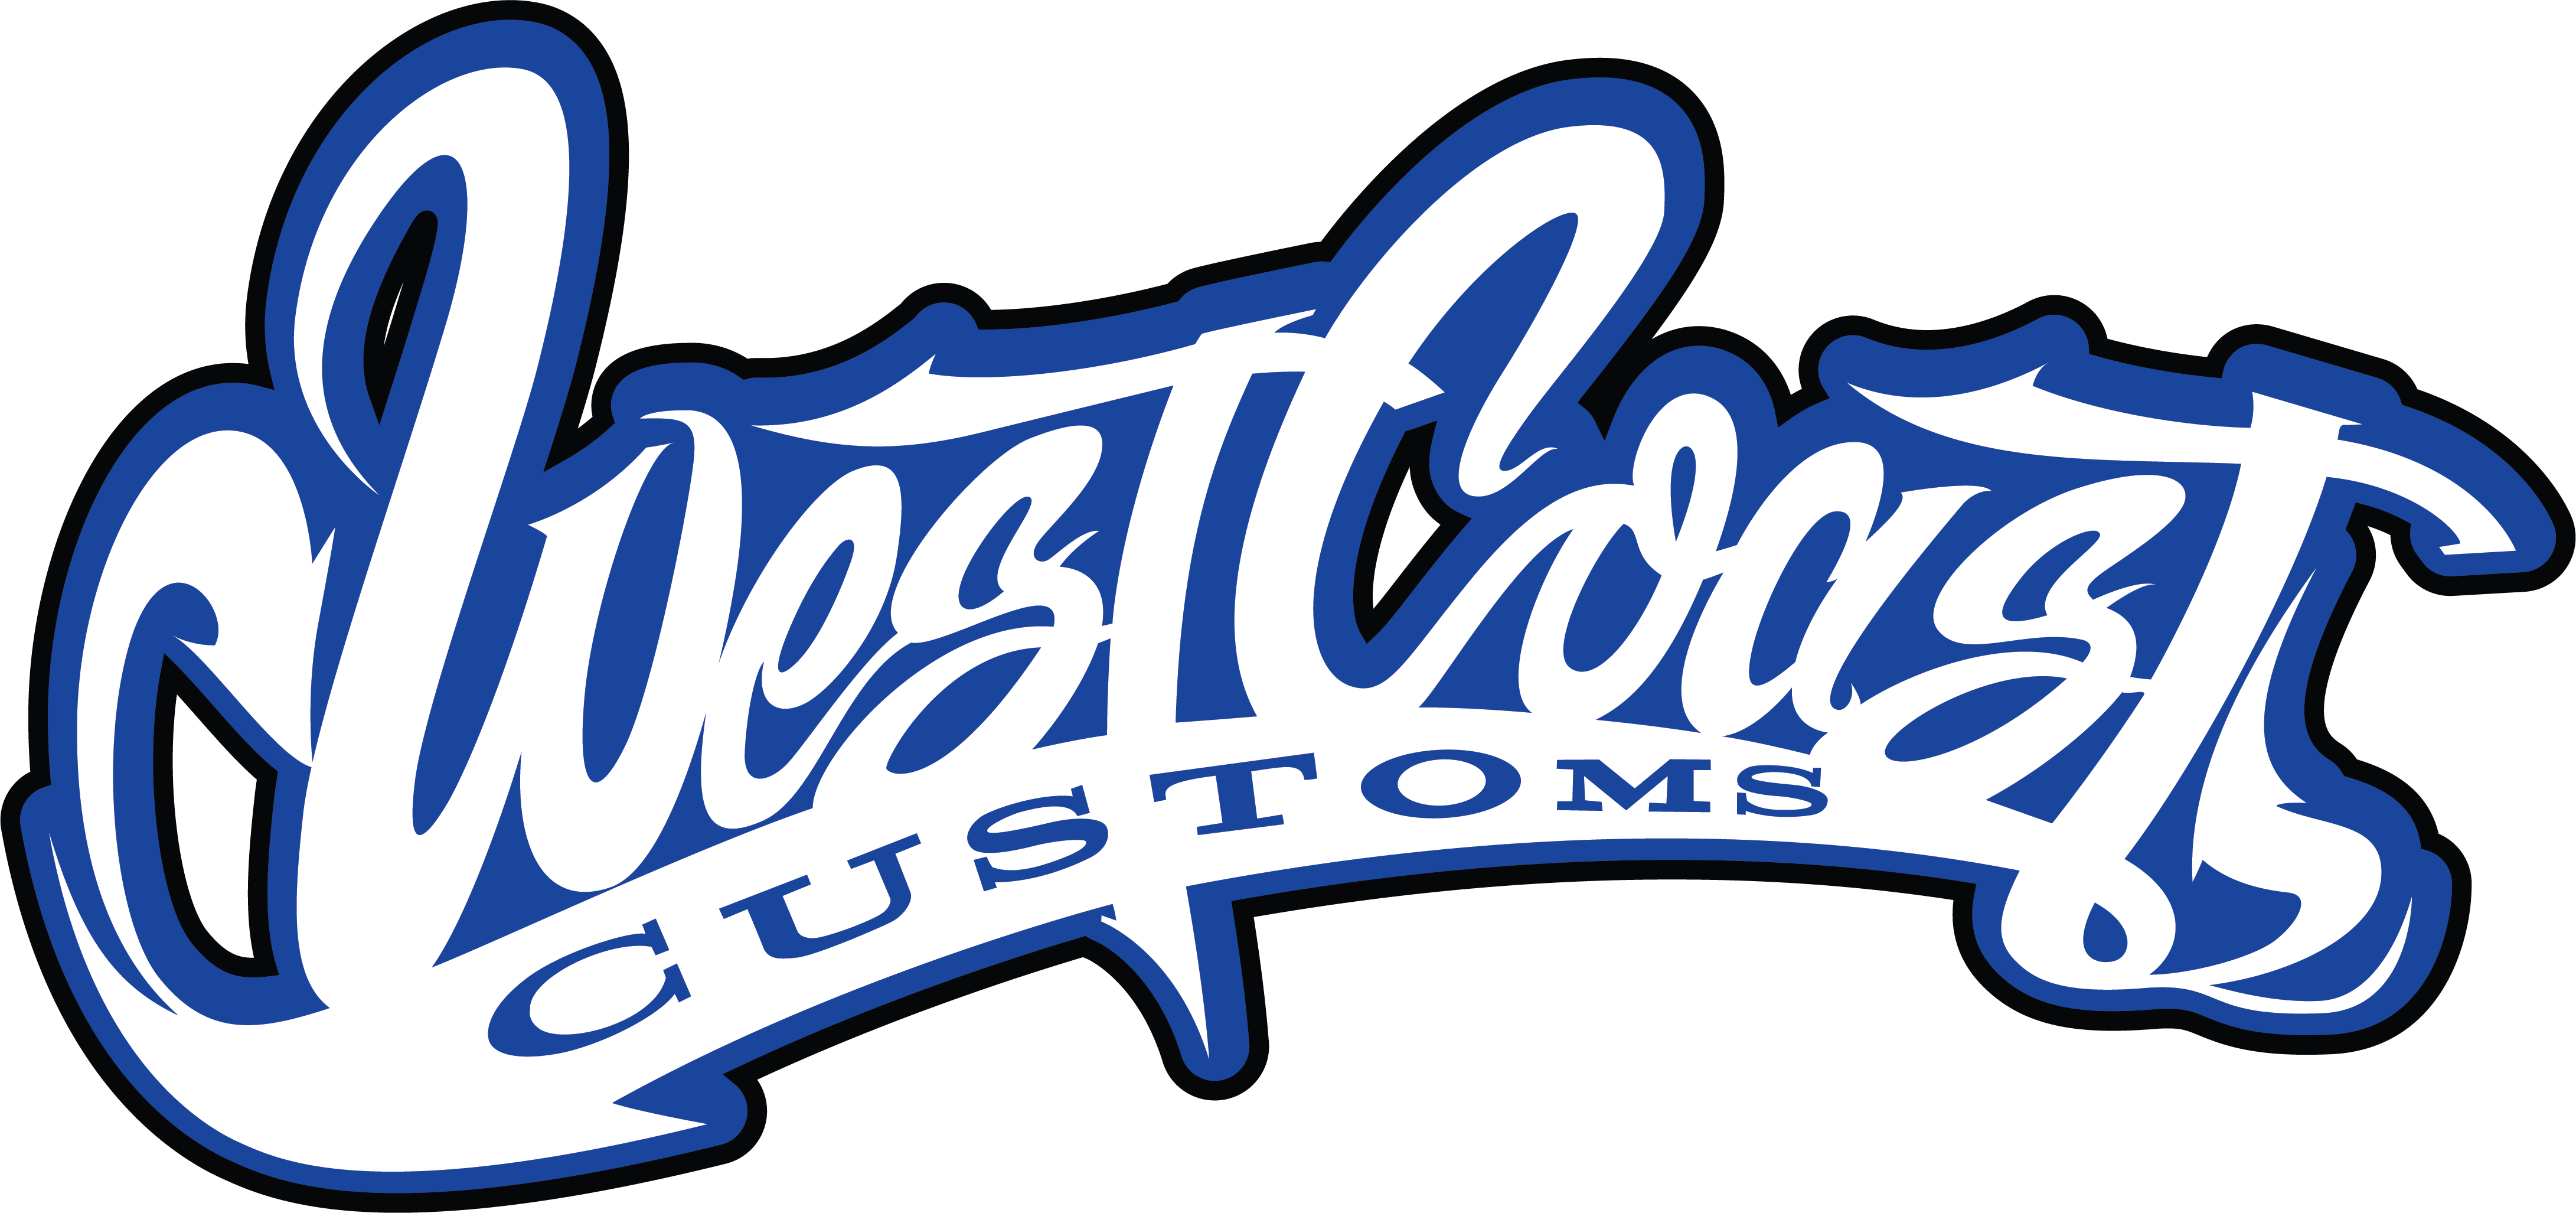 West Coast Customs Online Store